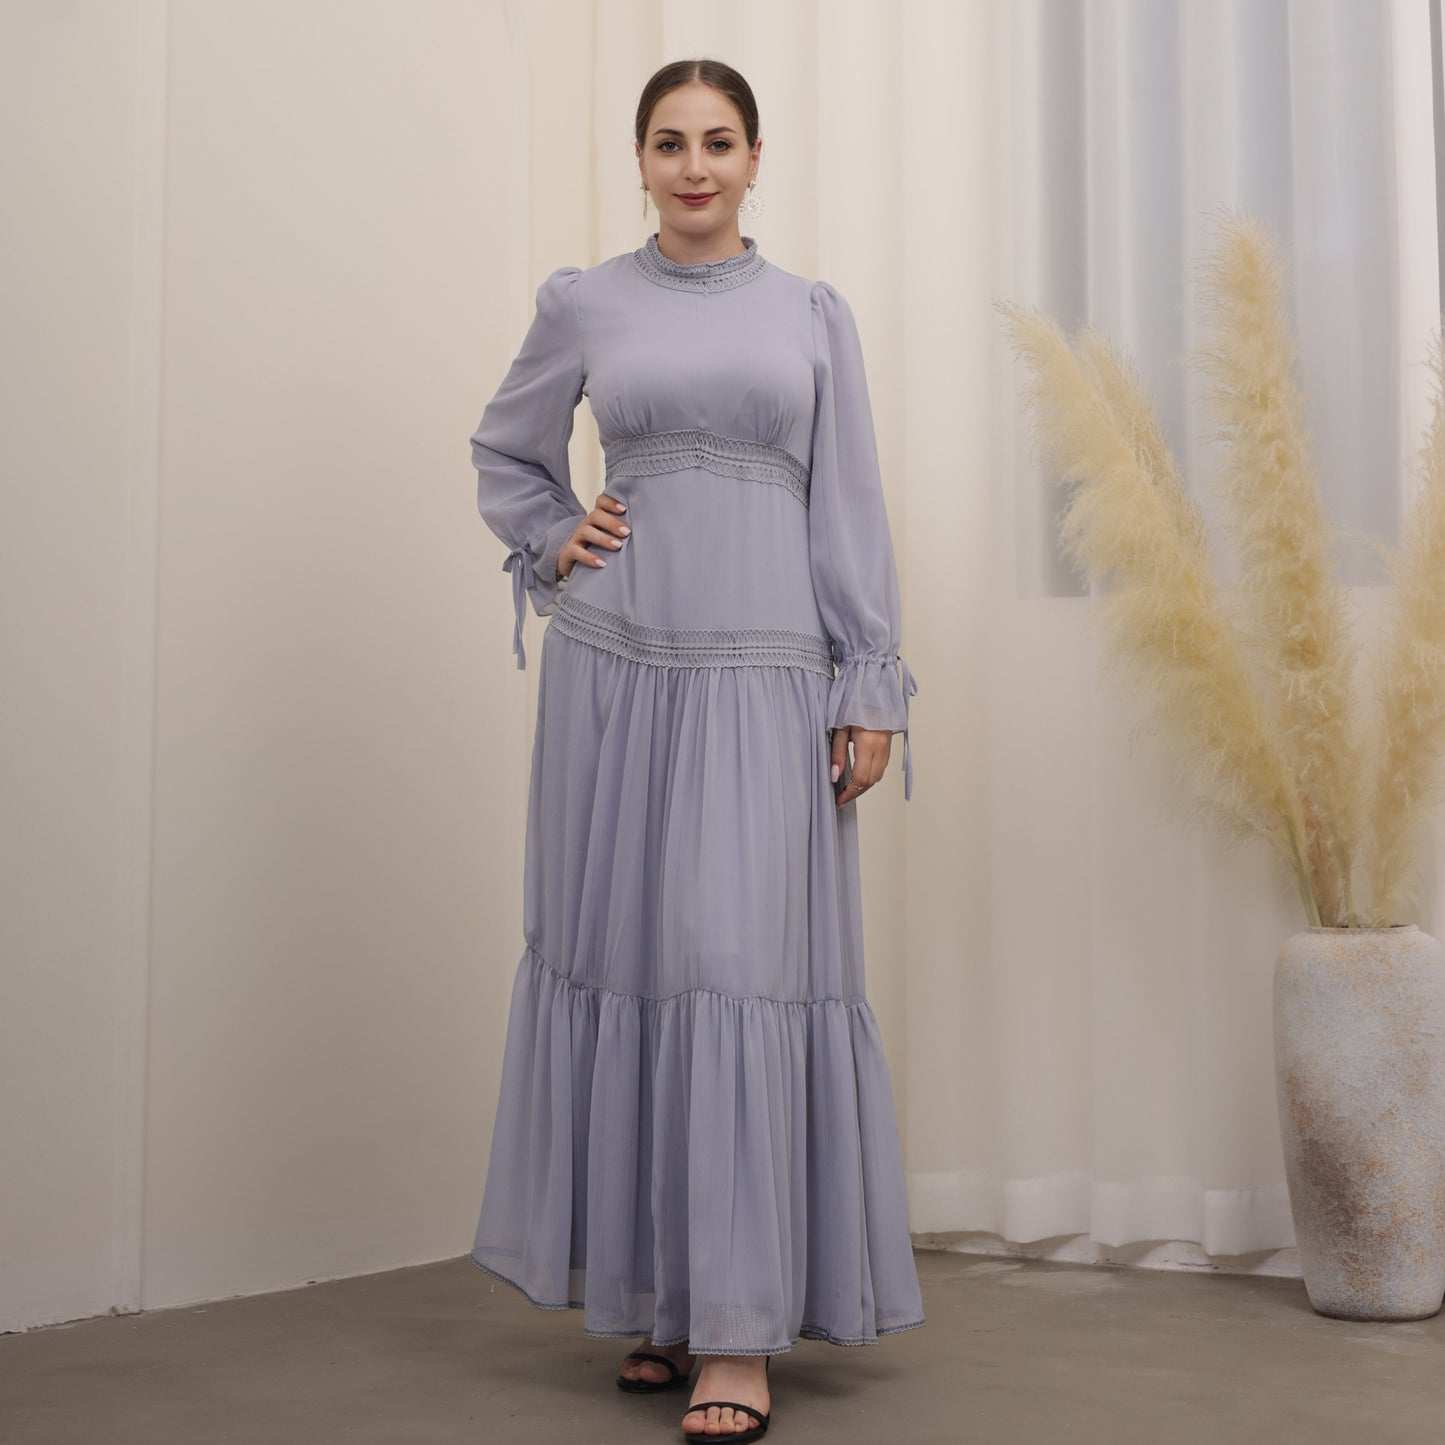 Exquisite Lace Middle East Dress Long Dress